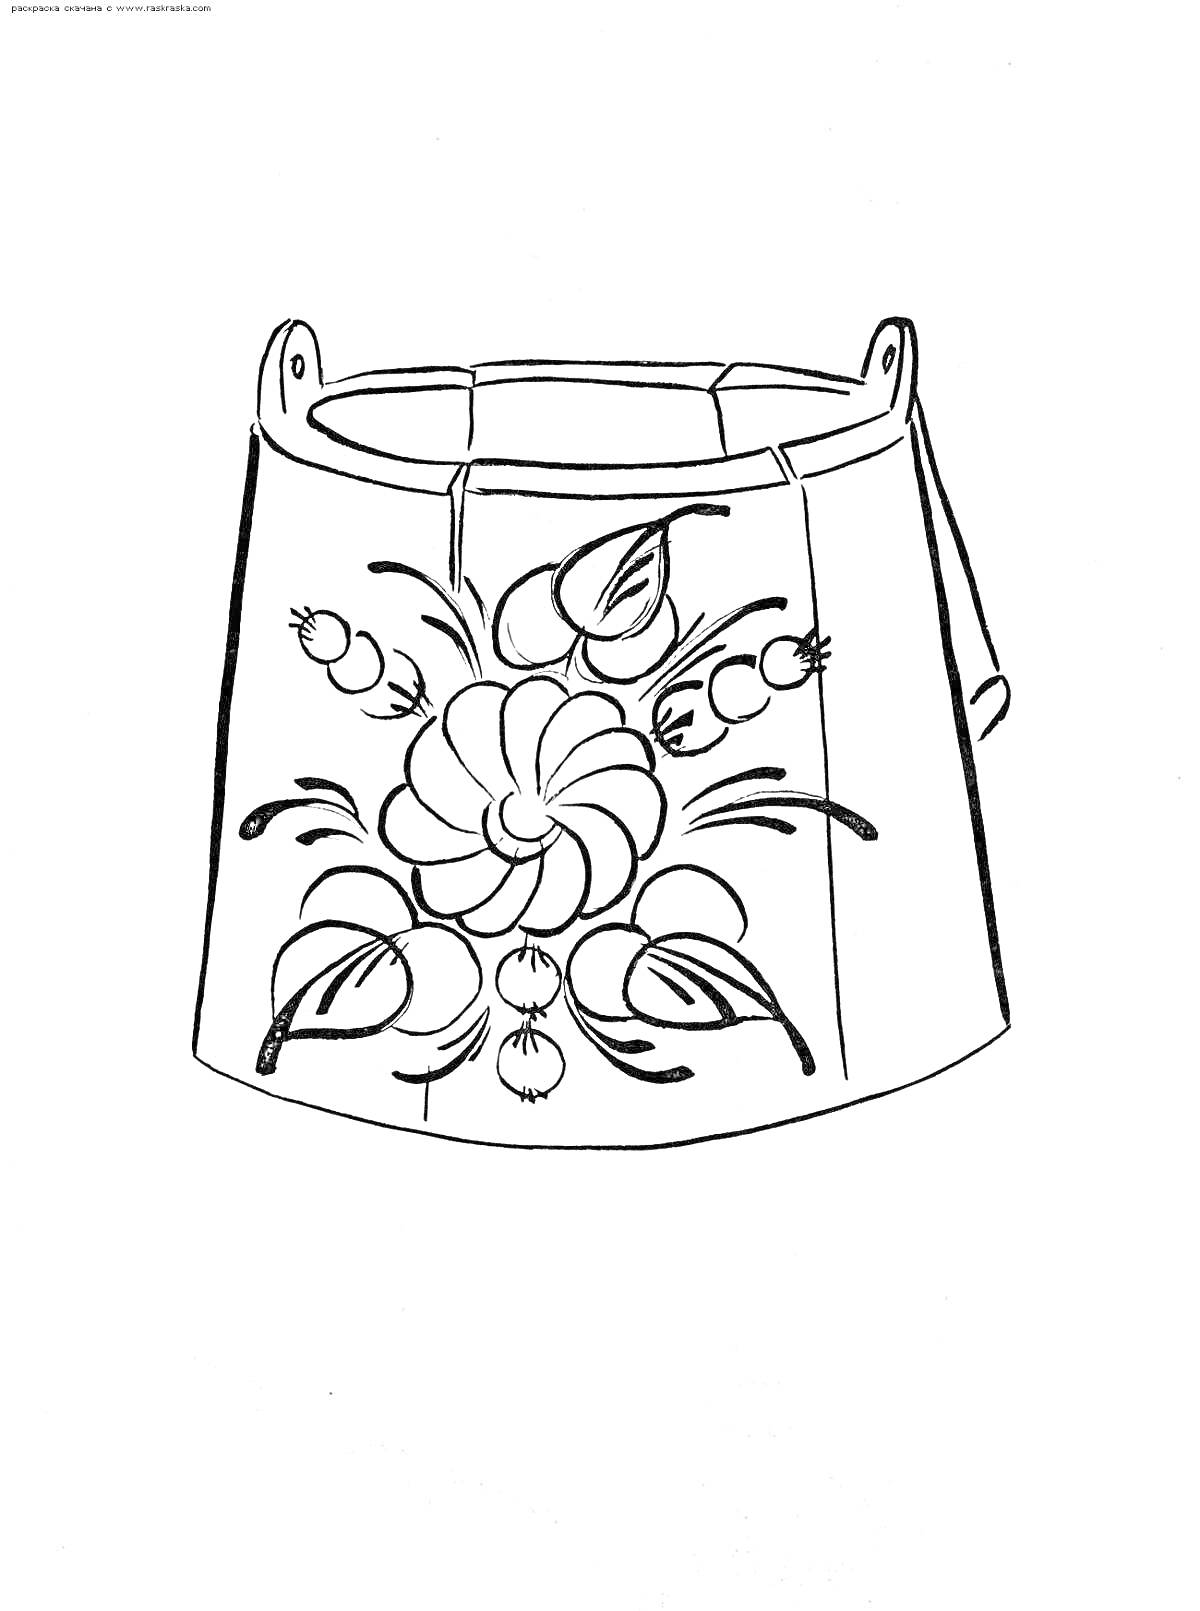 Раскраска Ведерко с хохломским узором: цветок, ягодки, листочки и завитушки